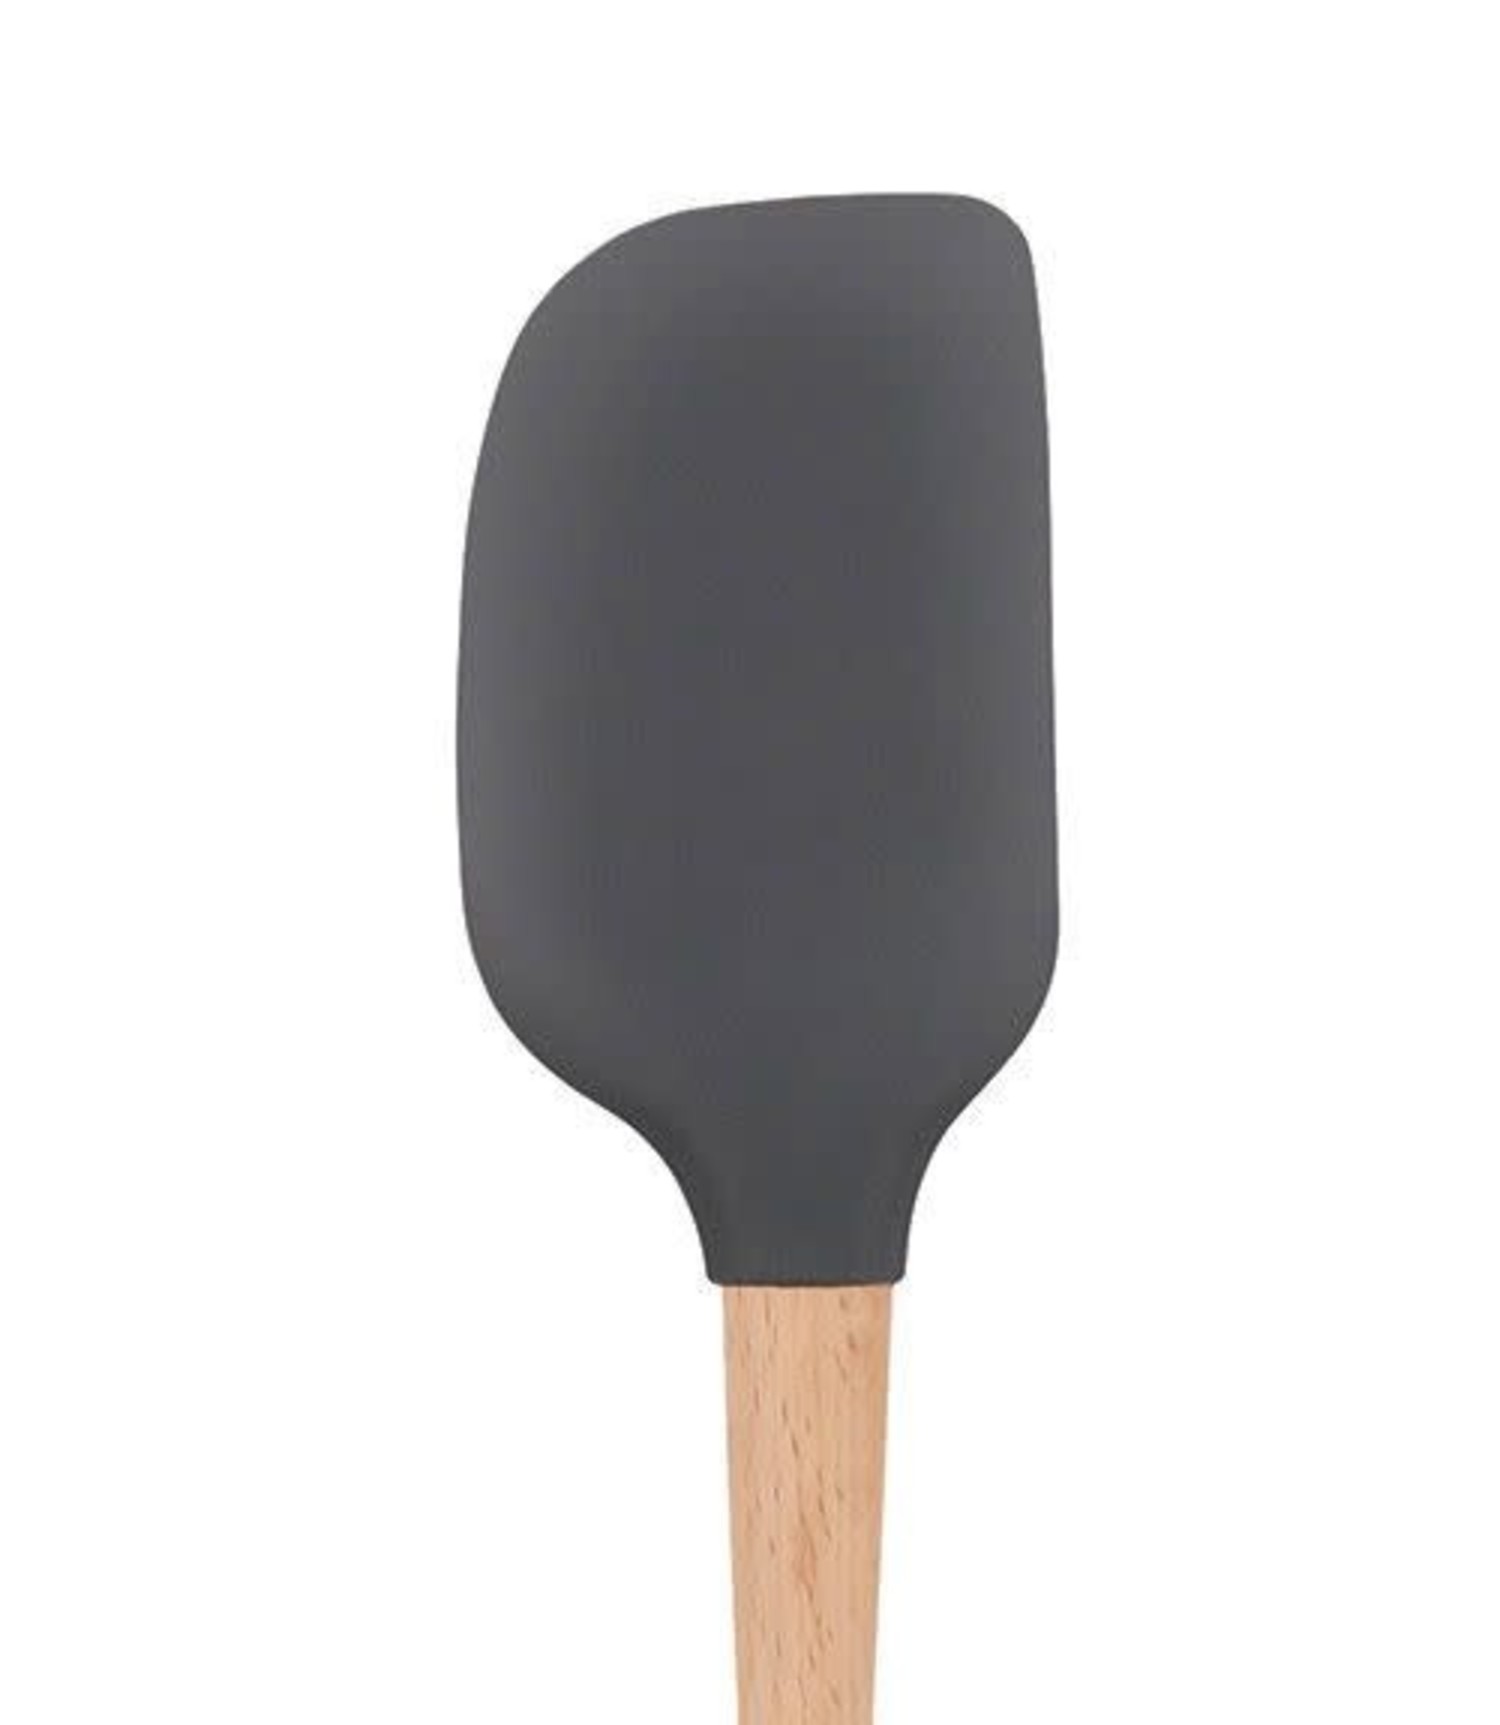 https://cdn.shoplightspeed.com/shops/633447/files/20631883/1500x4000x3/tovolo-charcoal-grey-silicone-spatula-with-wood-ha.jpg